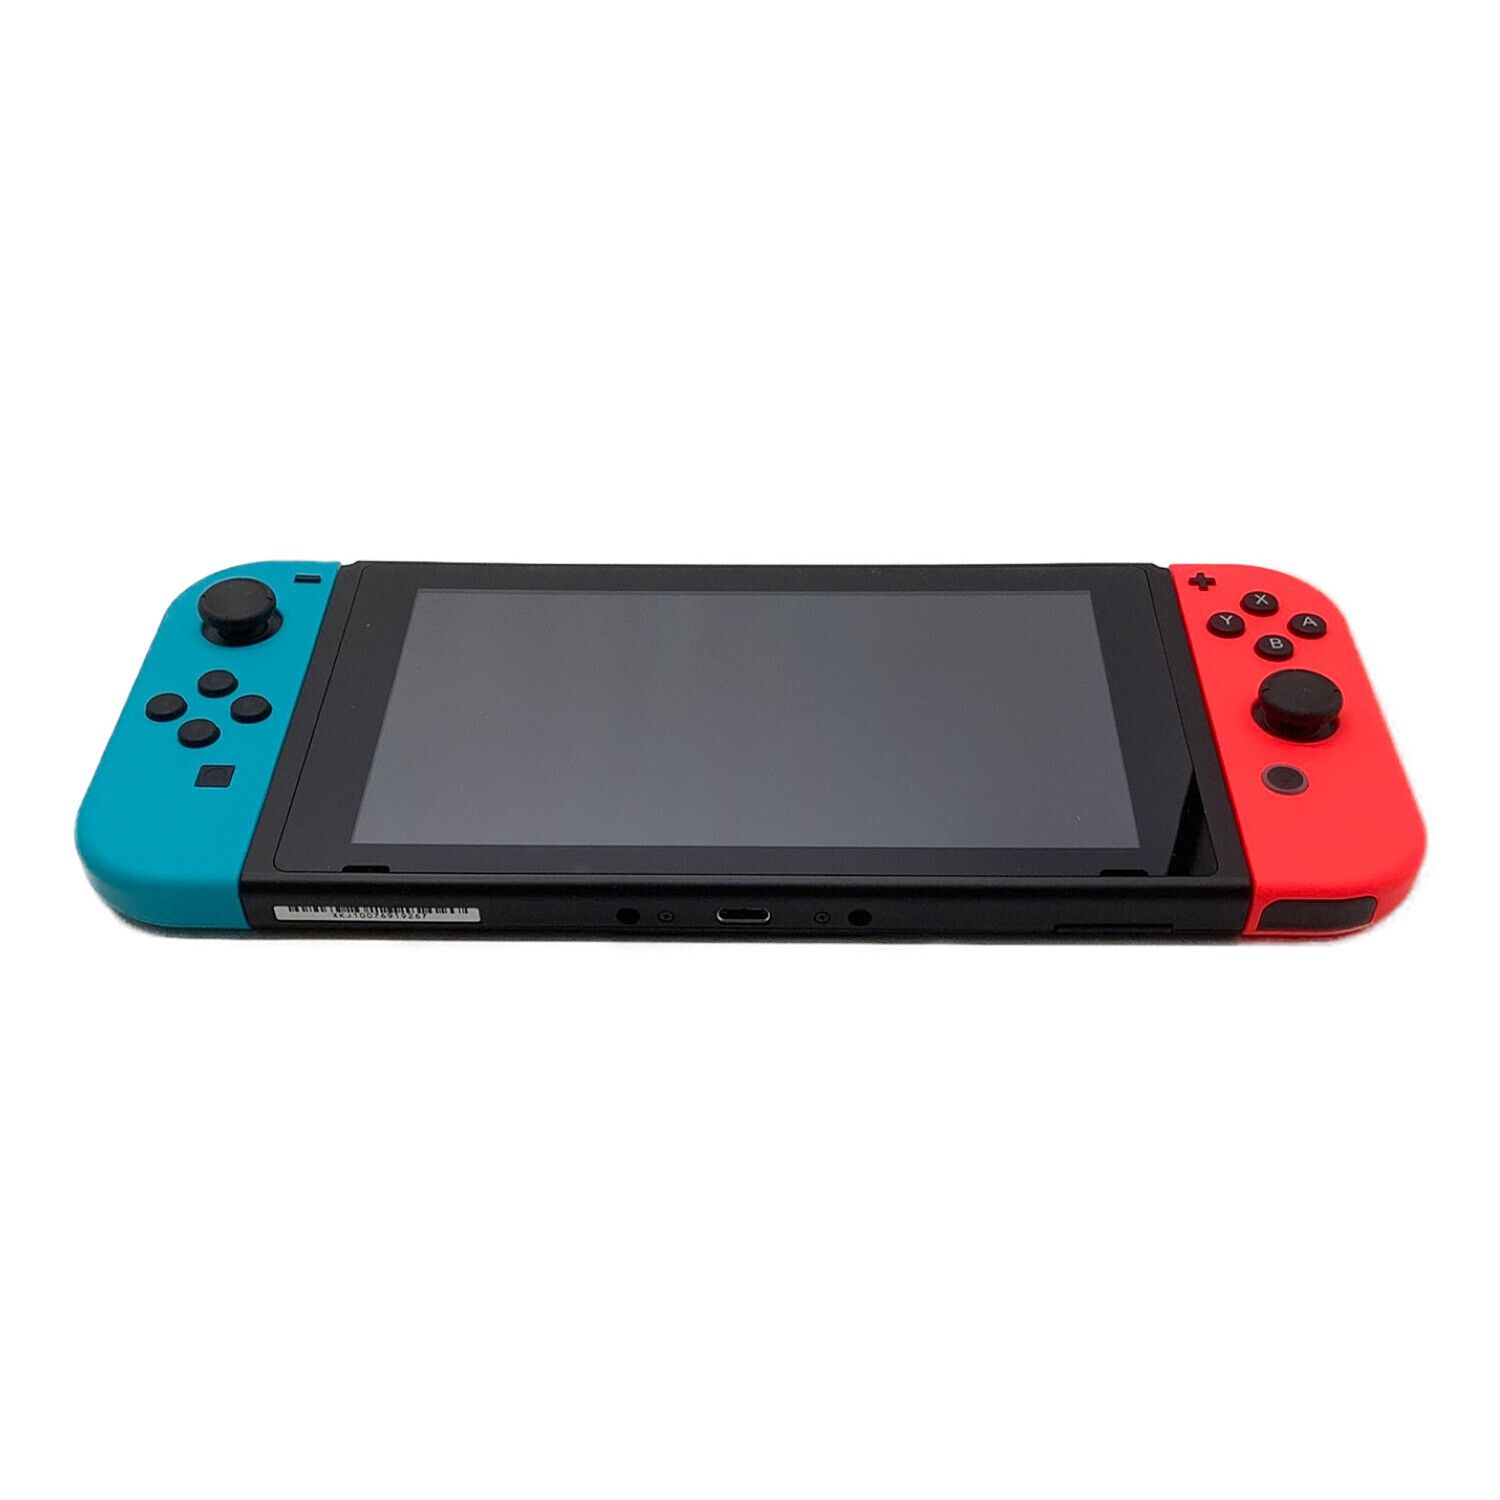 Nintendo (ニンテンドウ) Nintendo Switch hac-001 xkj10076919267 